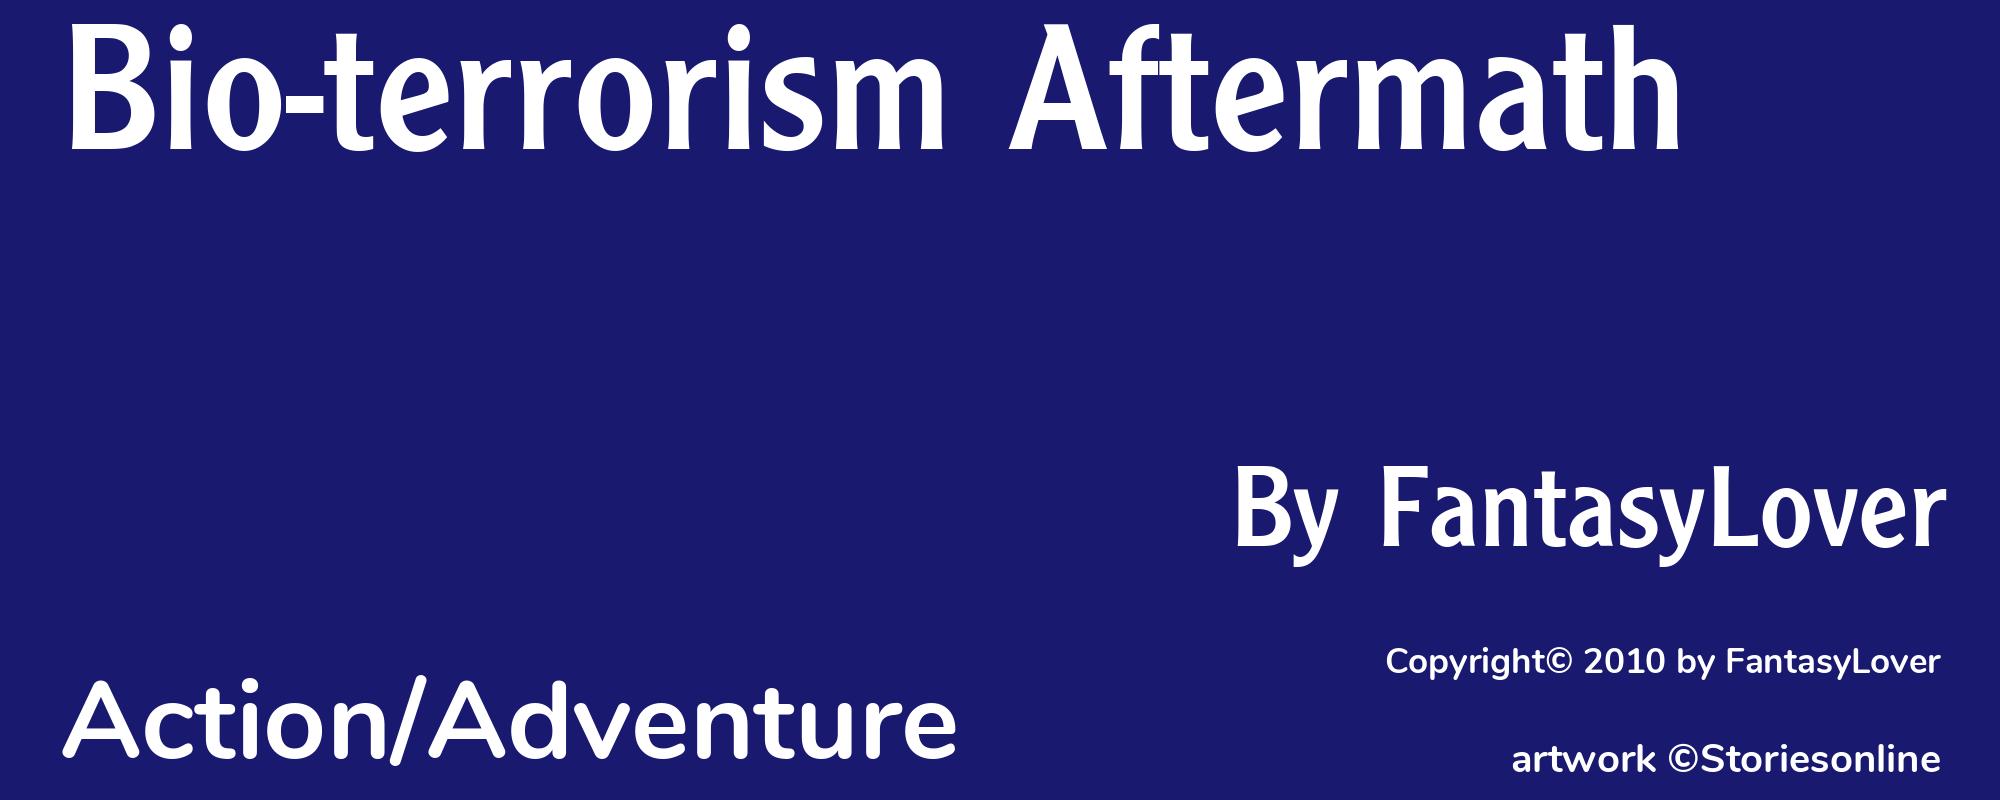 Bio-terrorism Aftermath - Cover